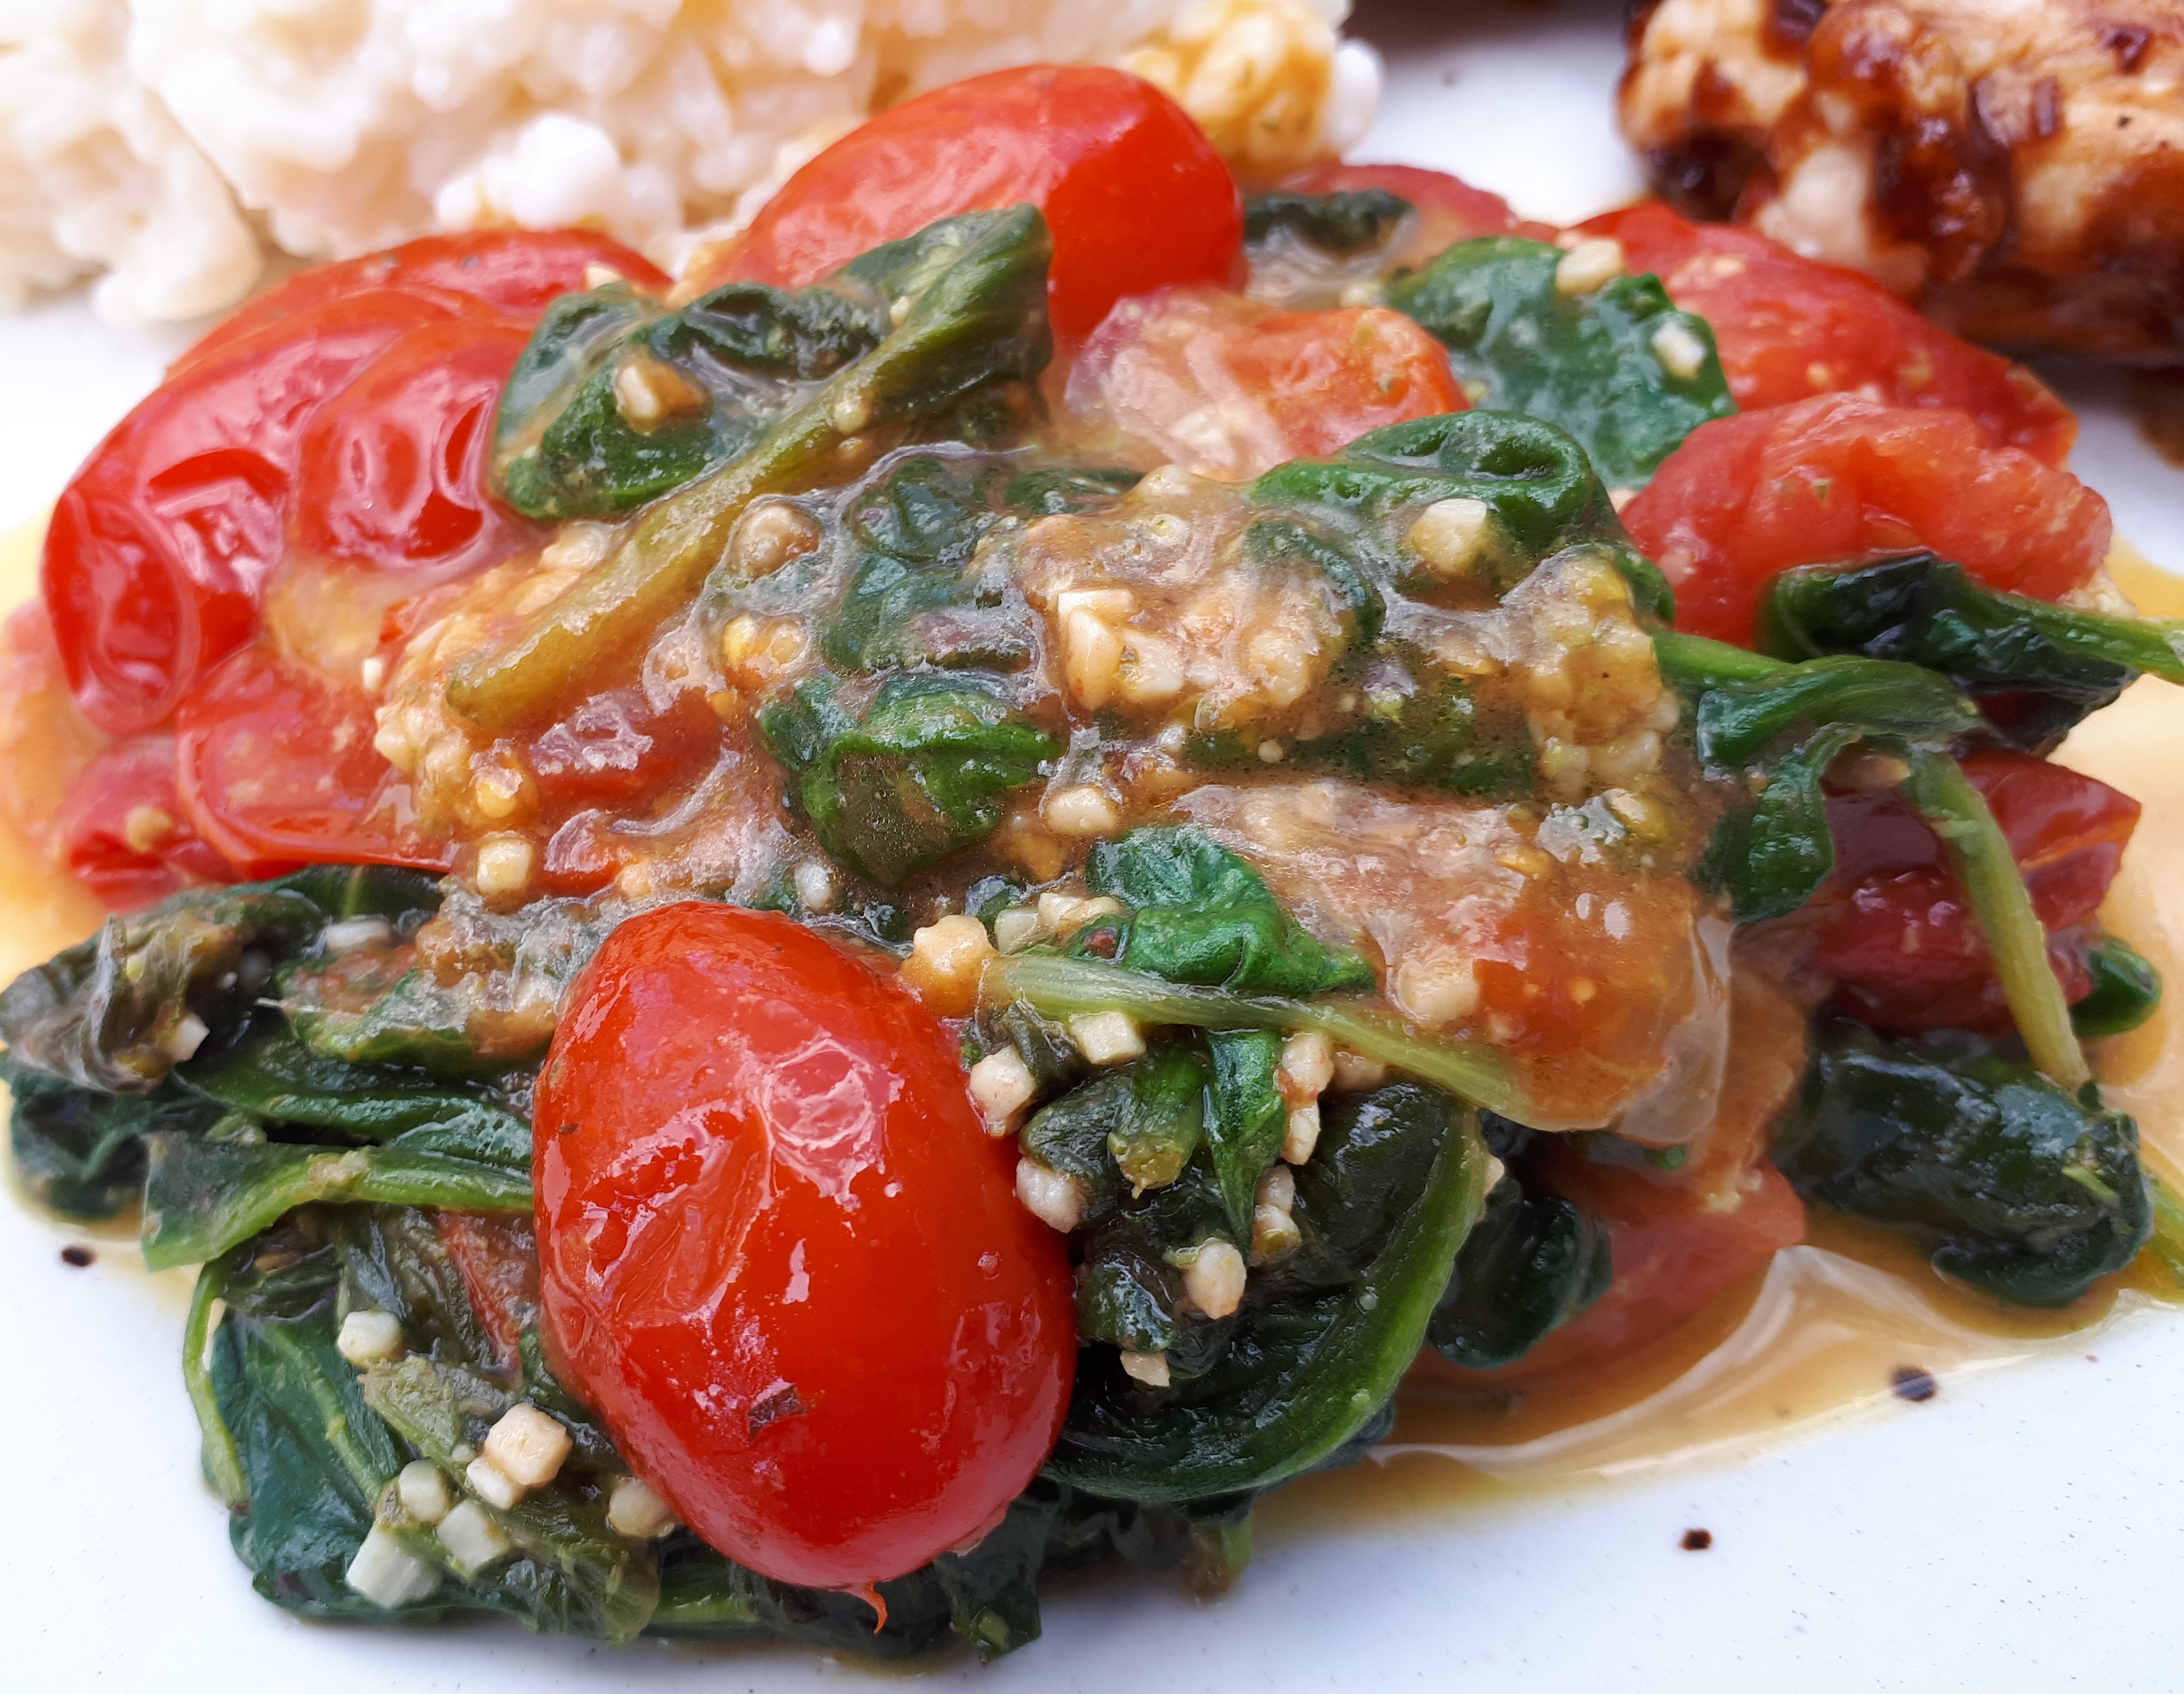 Pesto Spinach and Tomatoes Allrecipes Member